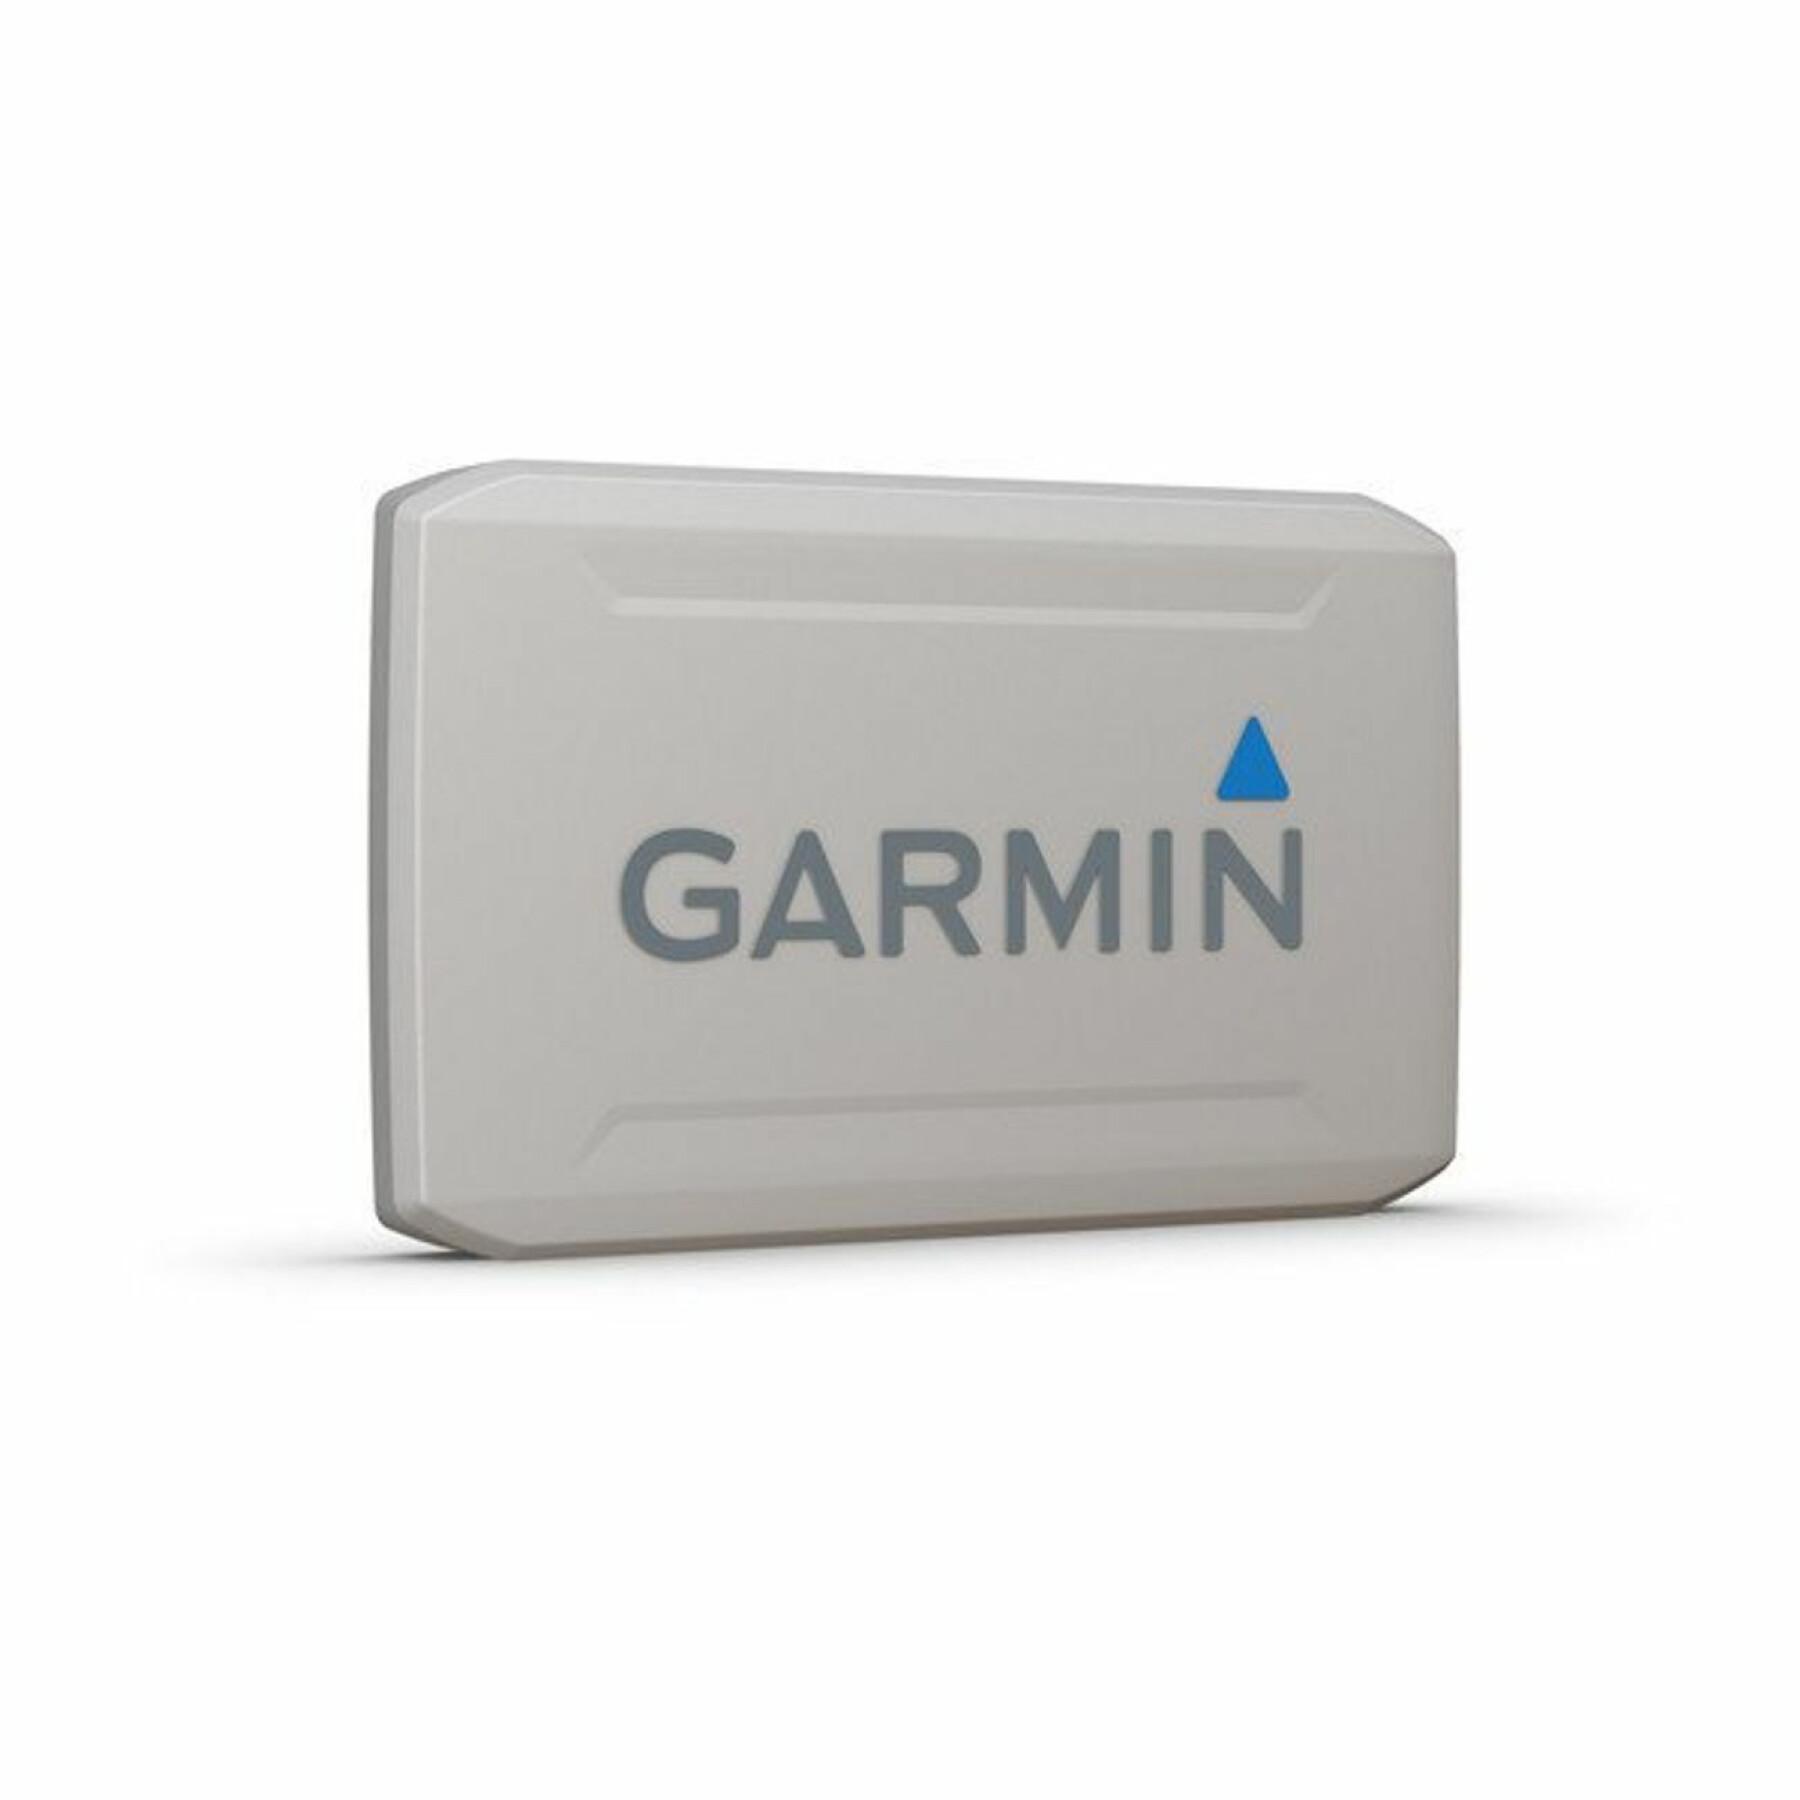 Capa protetora Garmin echomap plus 6xcv